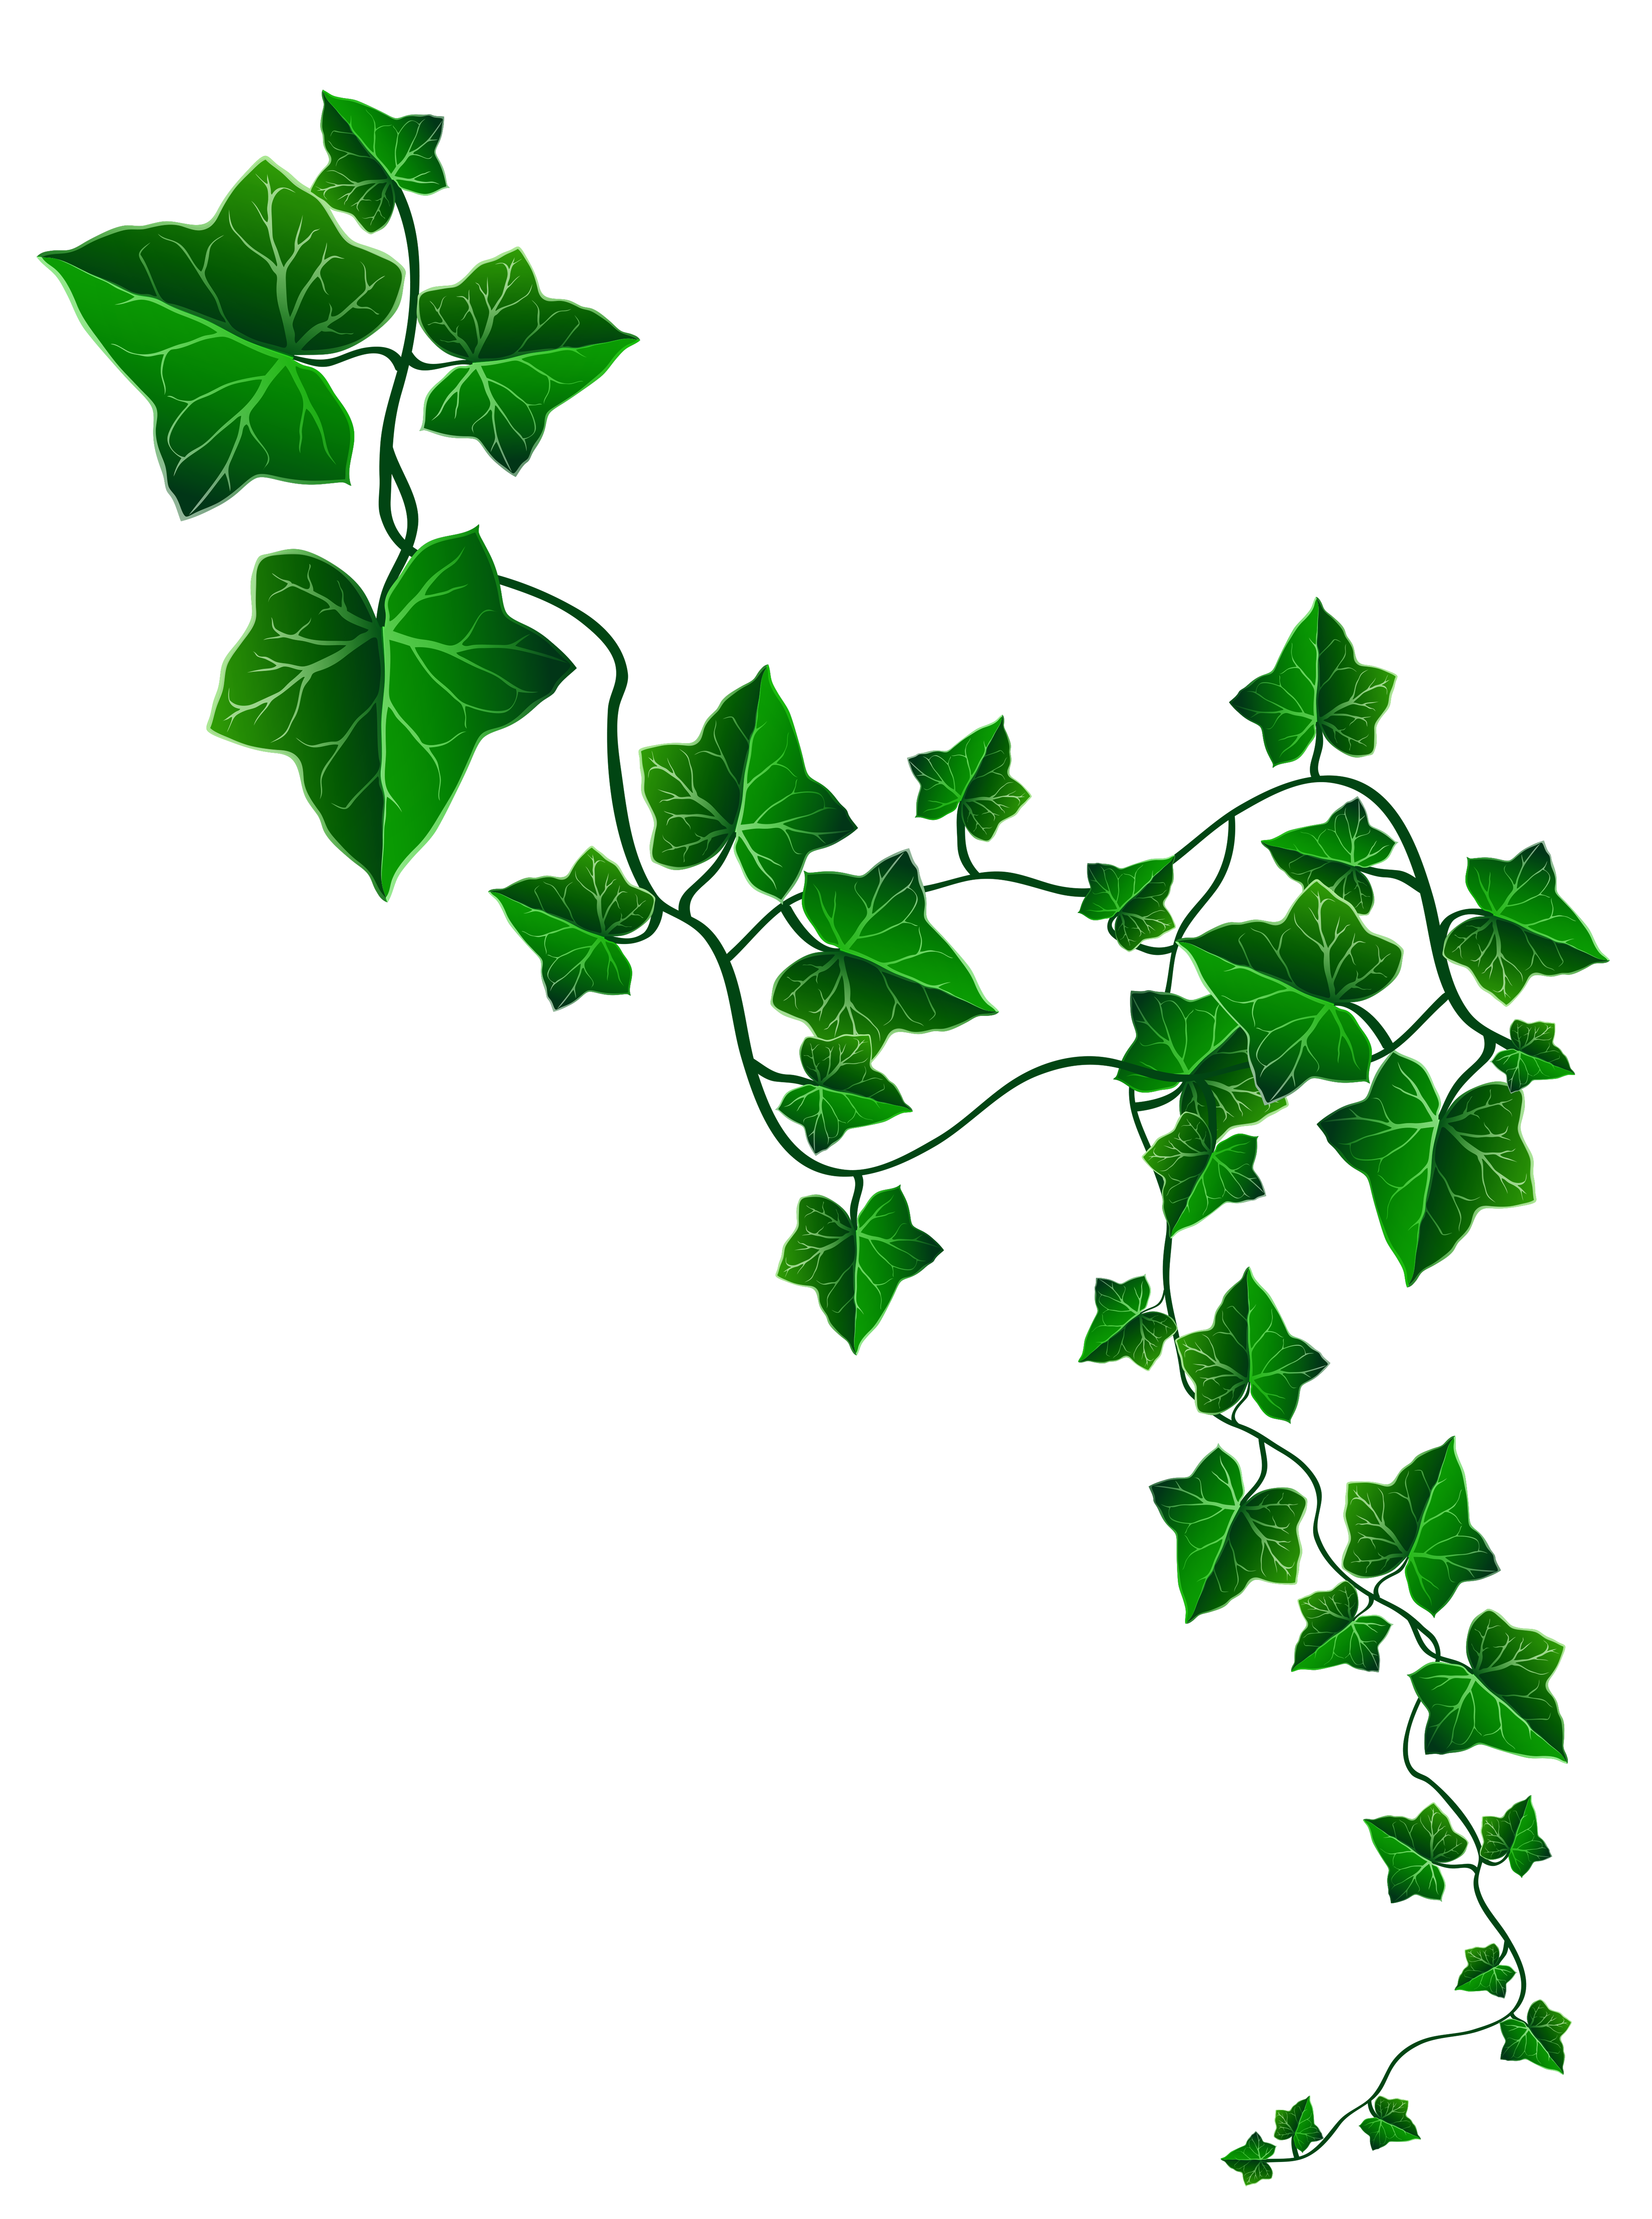 Free Ivy Leaf Png, Download Free Clip Art, Free Clip Art on